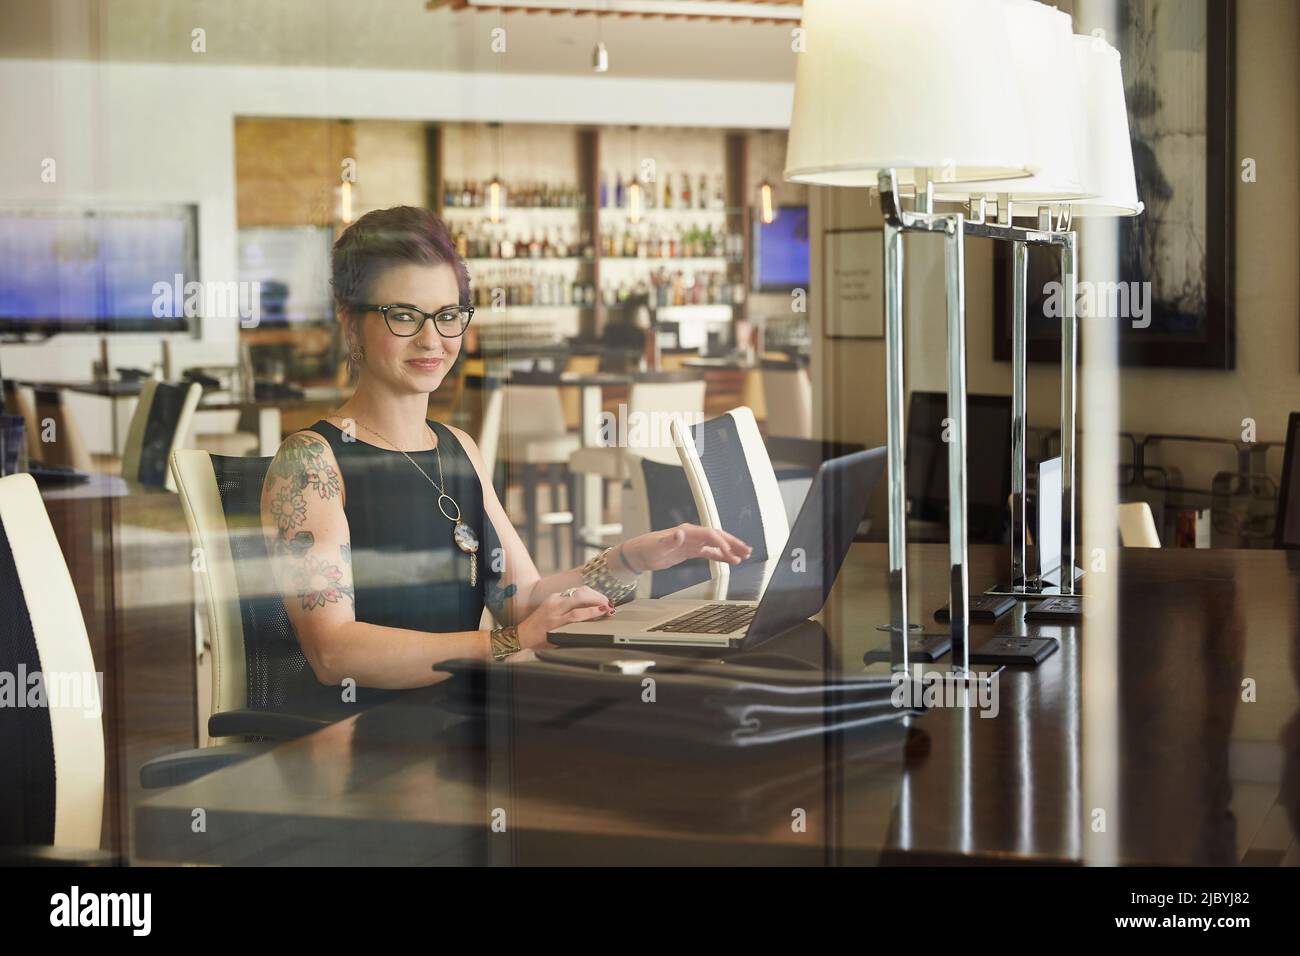 Caucasian woman using laptop at restaurant table Stock Photo